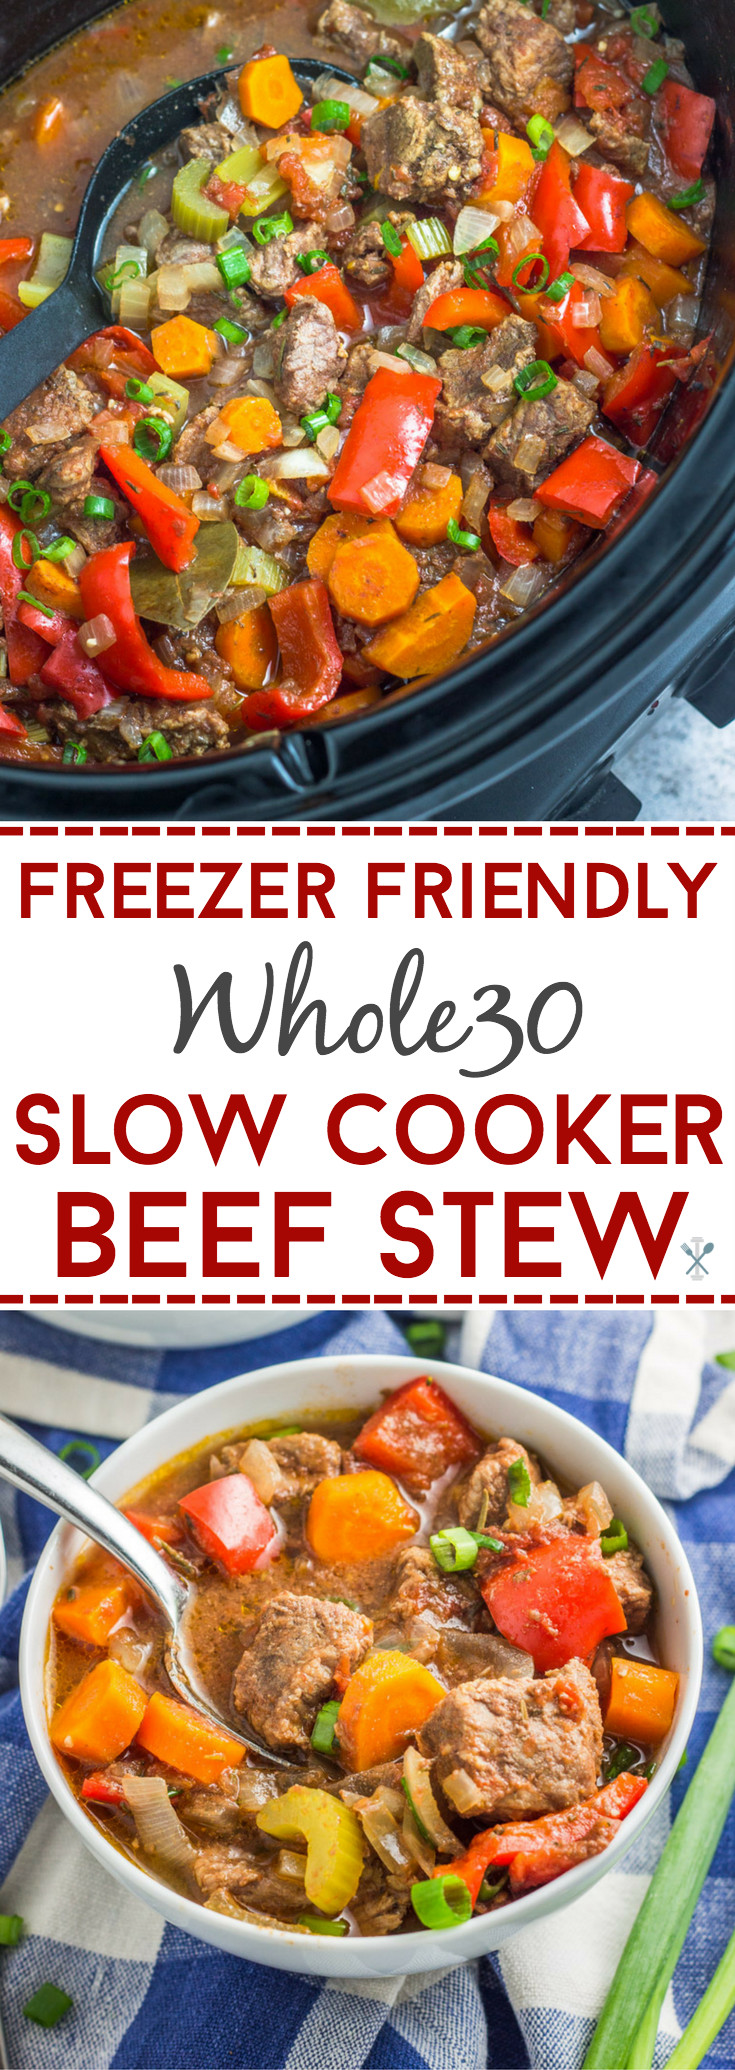 Freezer Beef Stew
 Freezer Friendly Whole30 Slow Cooker Beef Stew